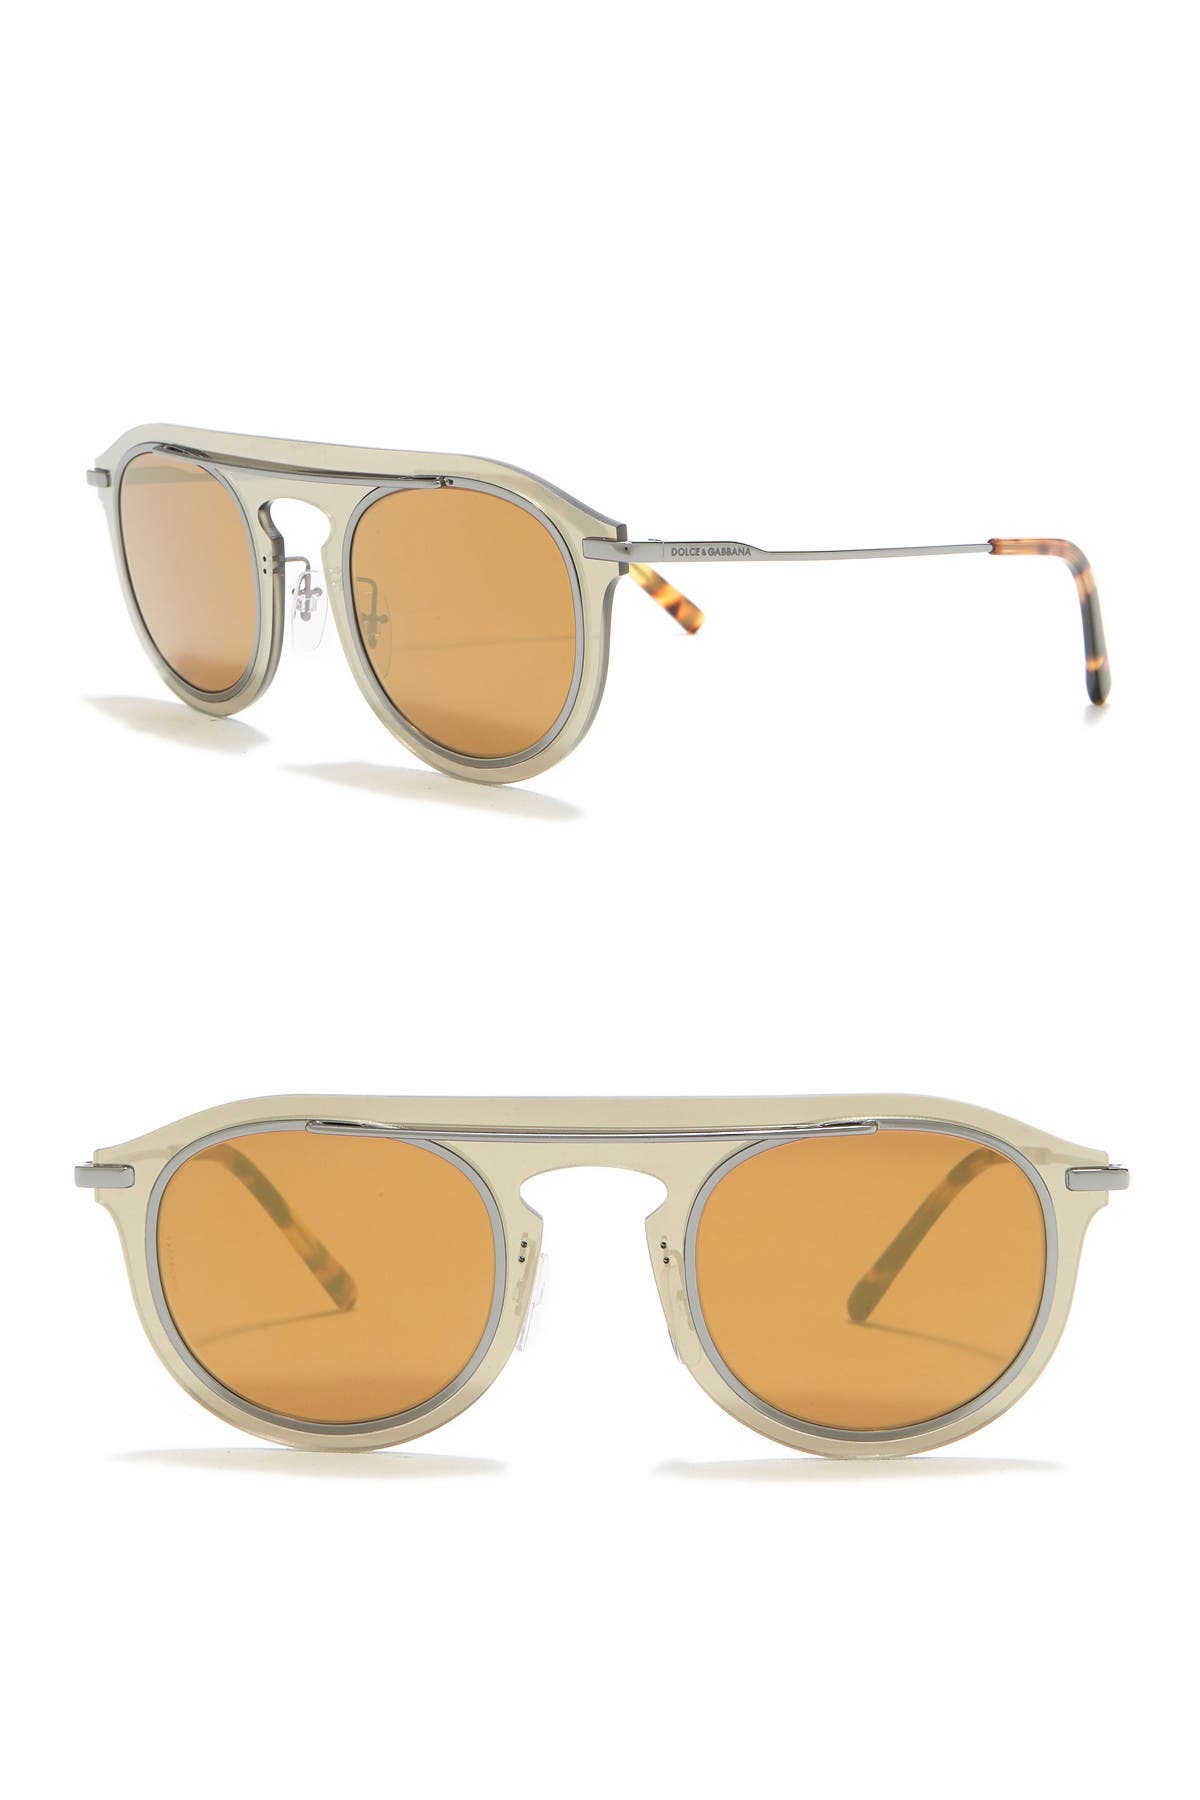 Dolce \u0026 Gabbana | 48mm Round Sunglasses 